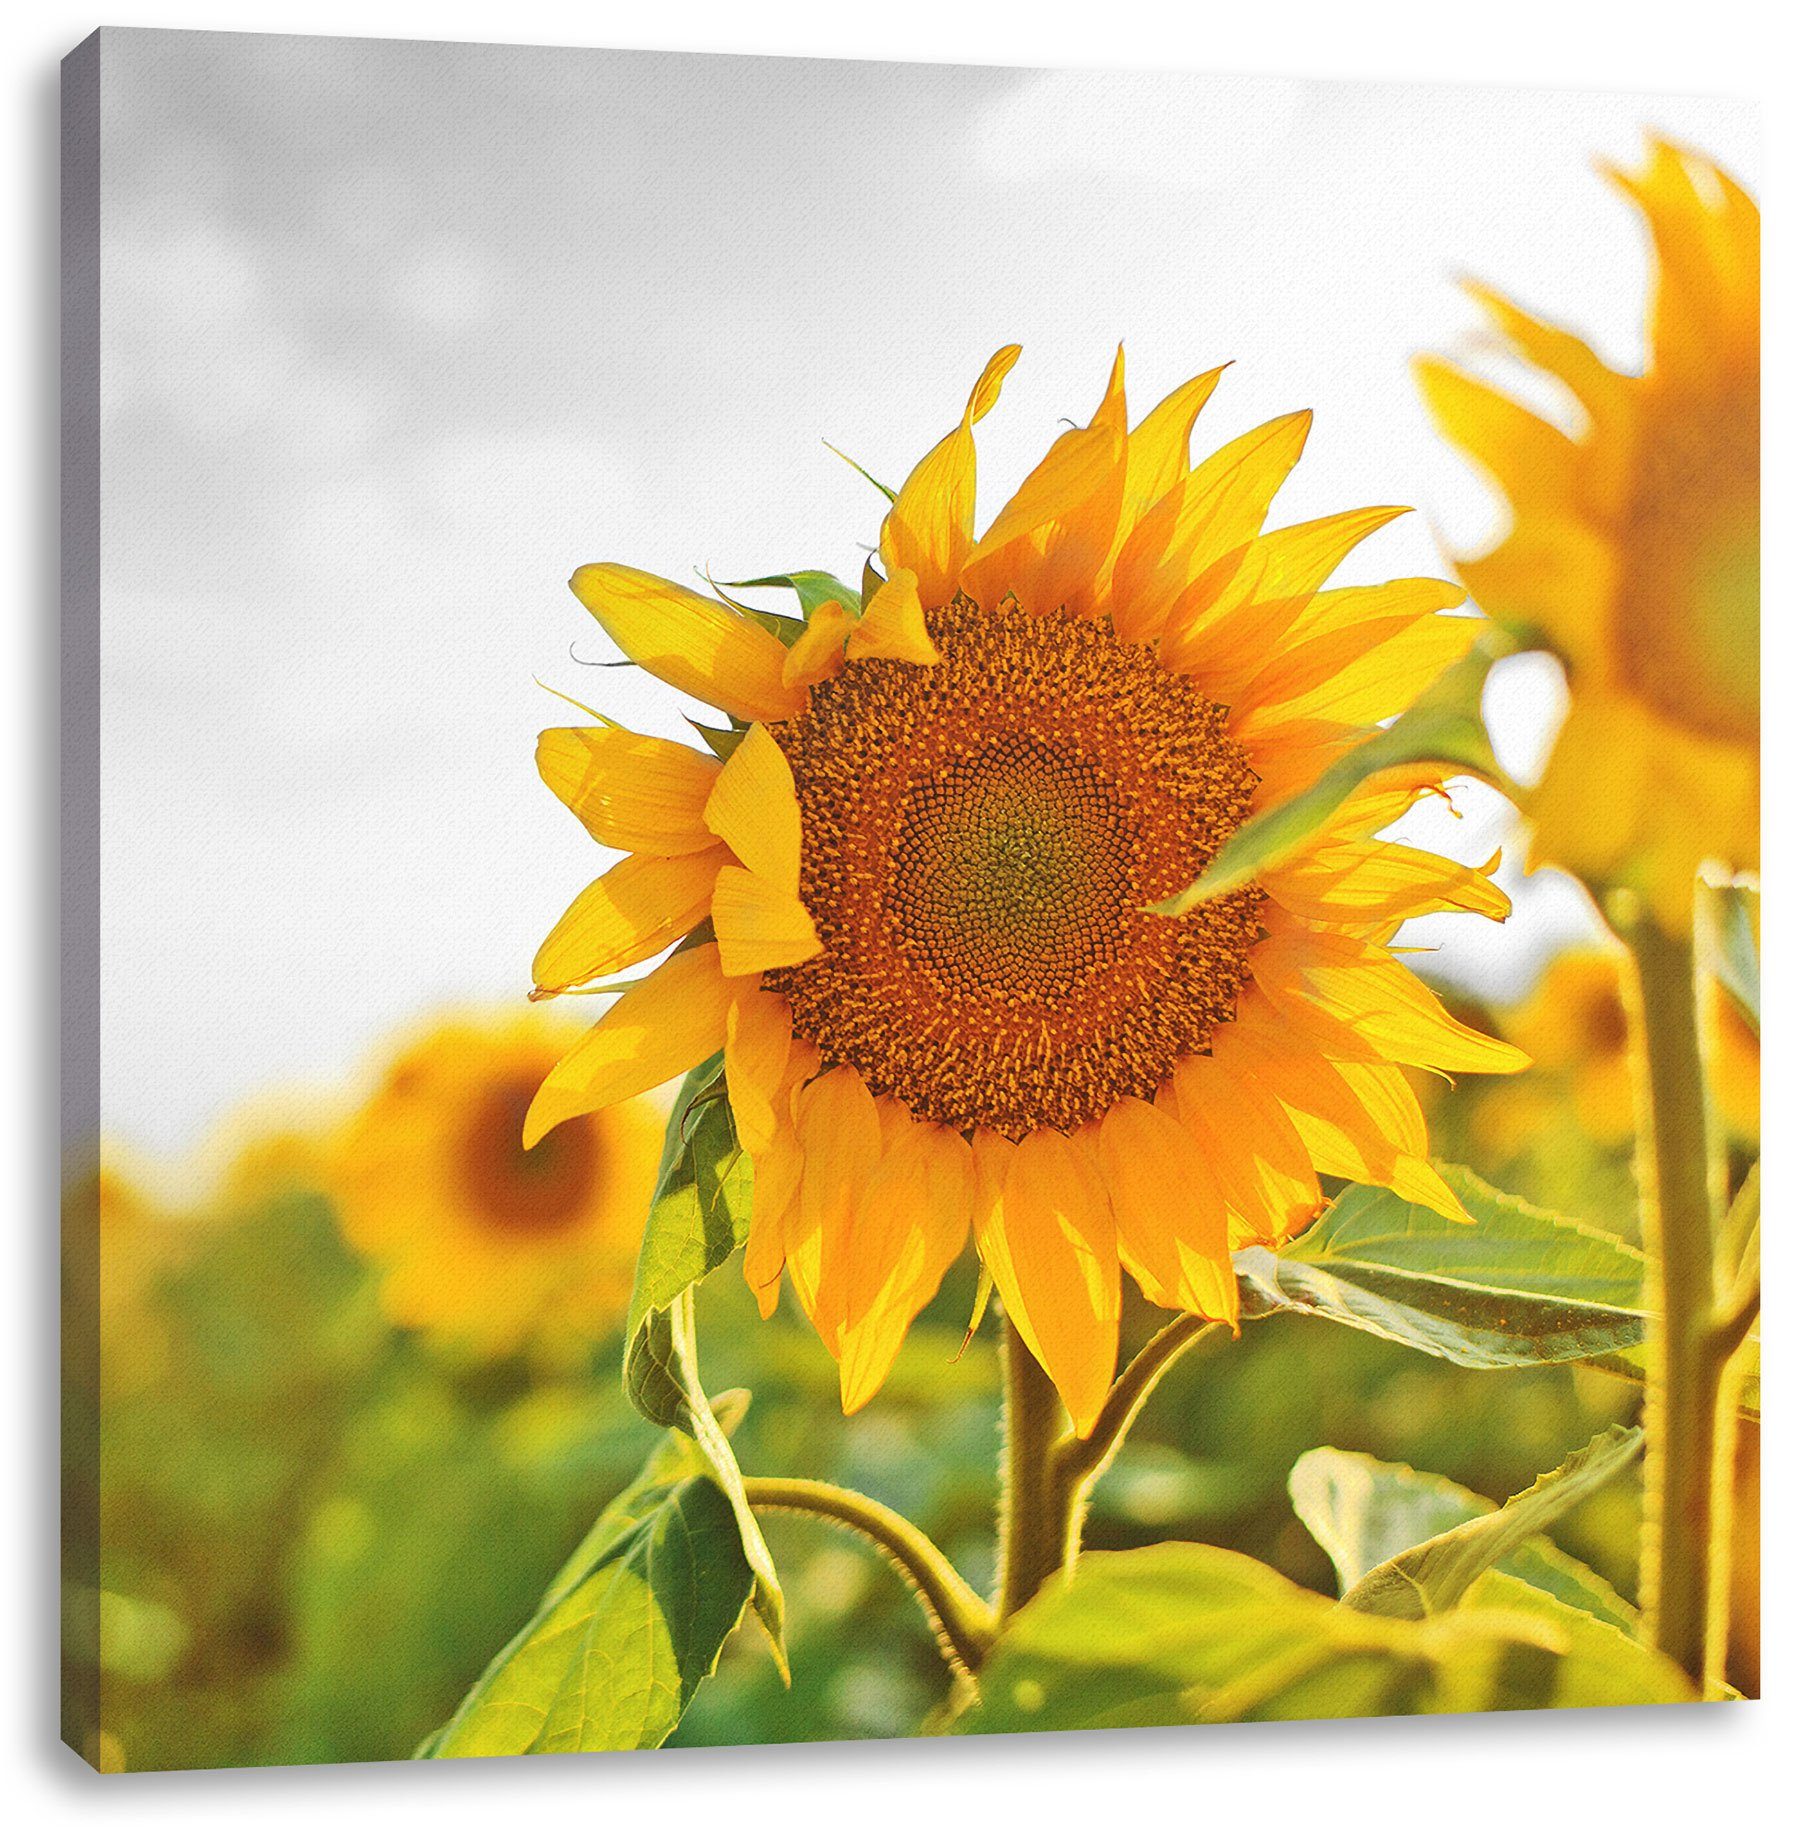 St), Pixxprint Zackenaufhänger Leinwandbild bespannt, Nahaufnahme Sonnenblume inkl. Nahaufnahme einer Leinwandbild einer (1 fertig Sonnenblume,